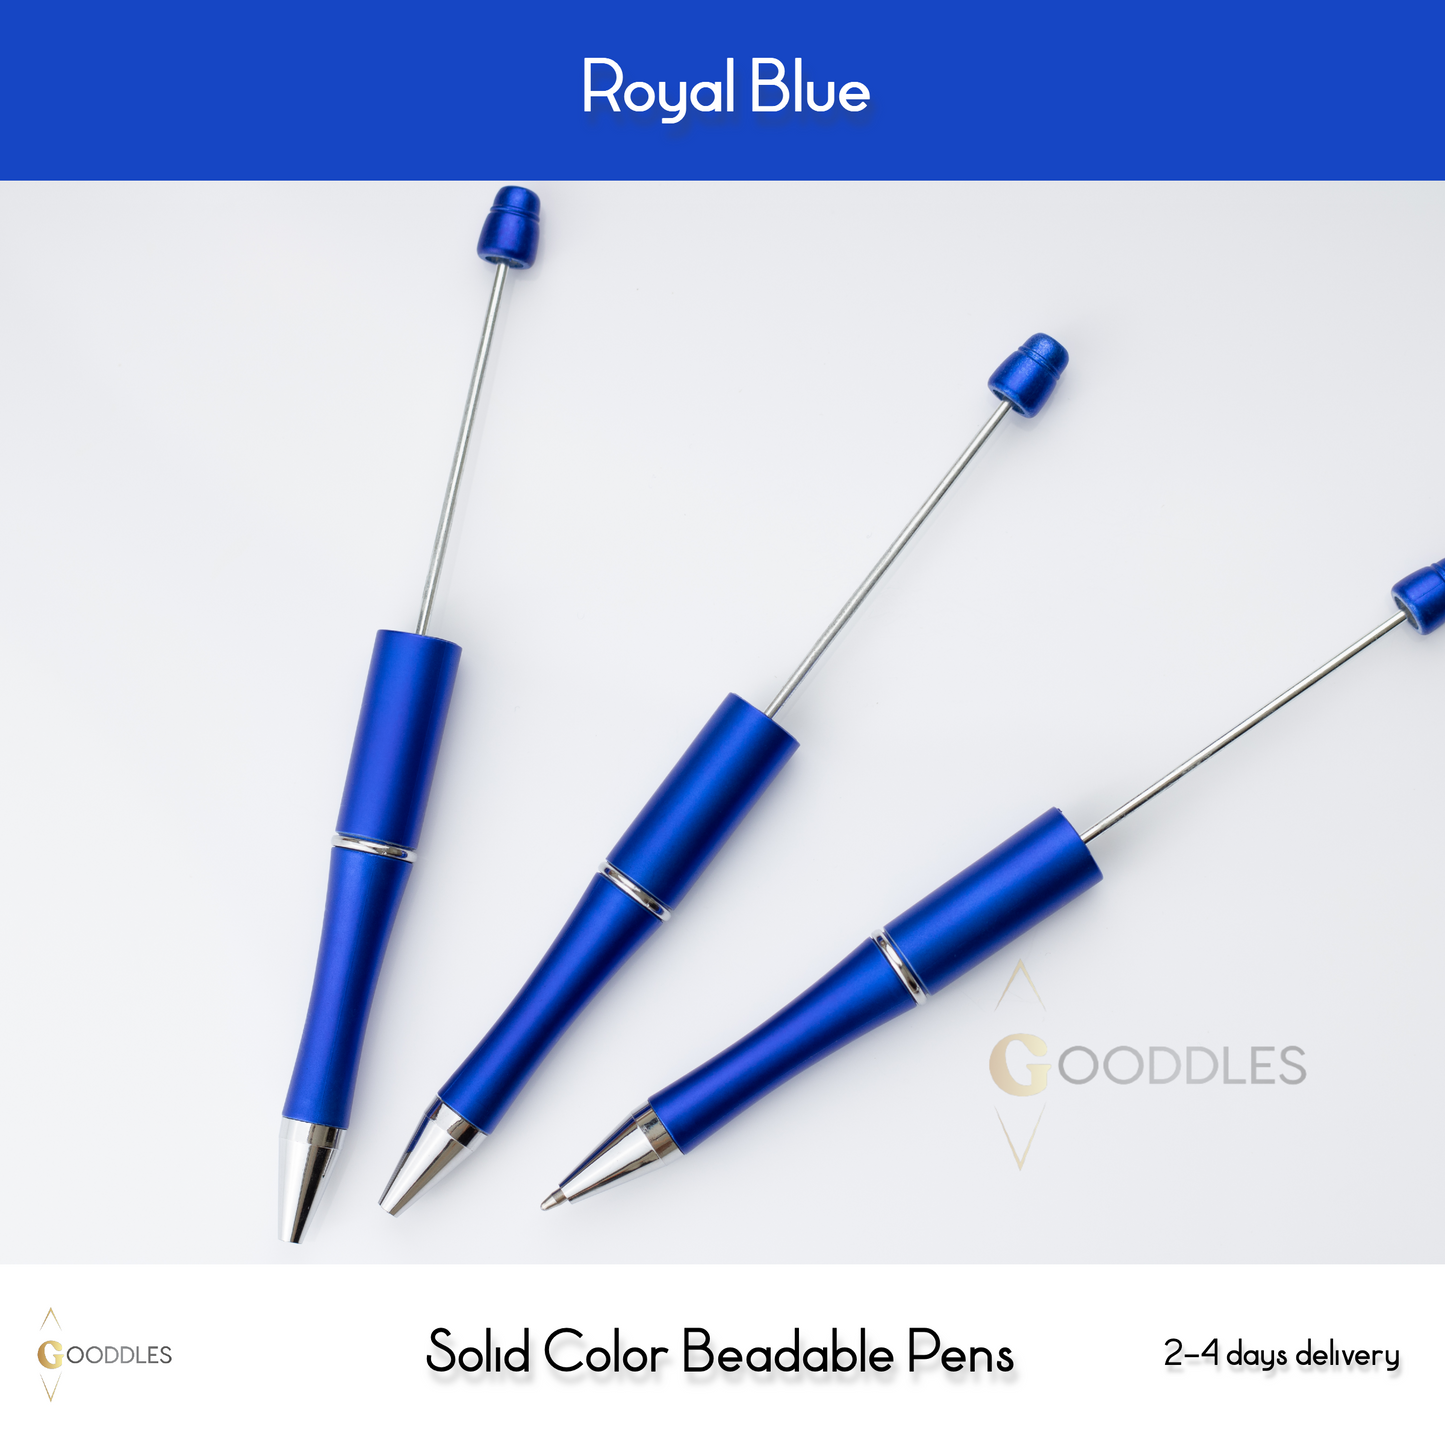 Royal Blue Solid Color Beadable Pens